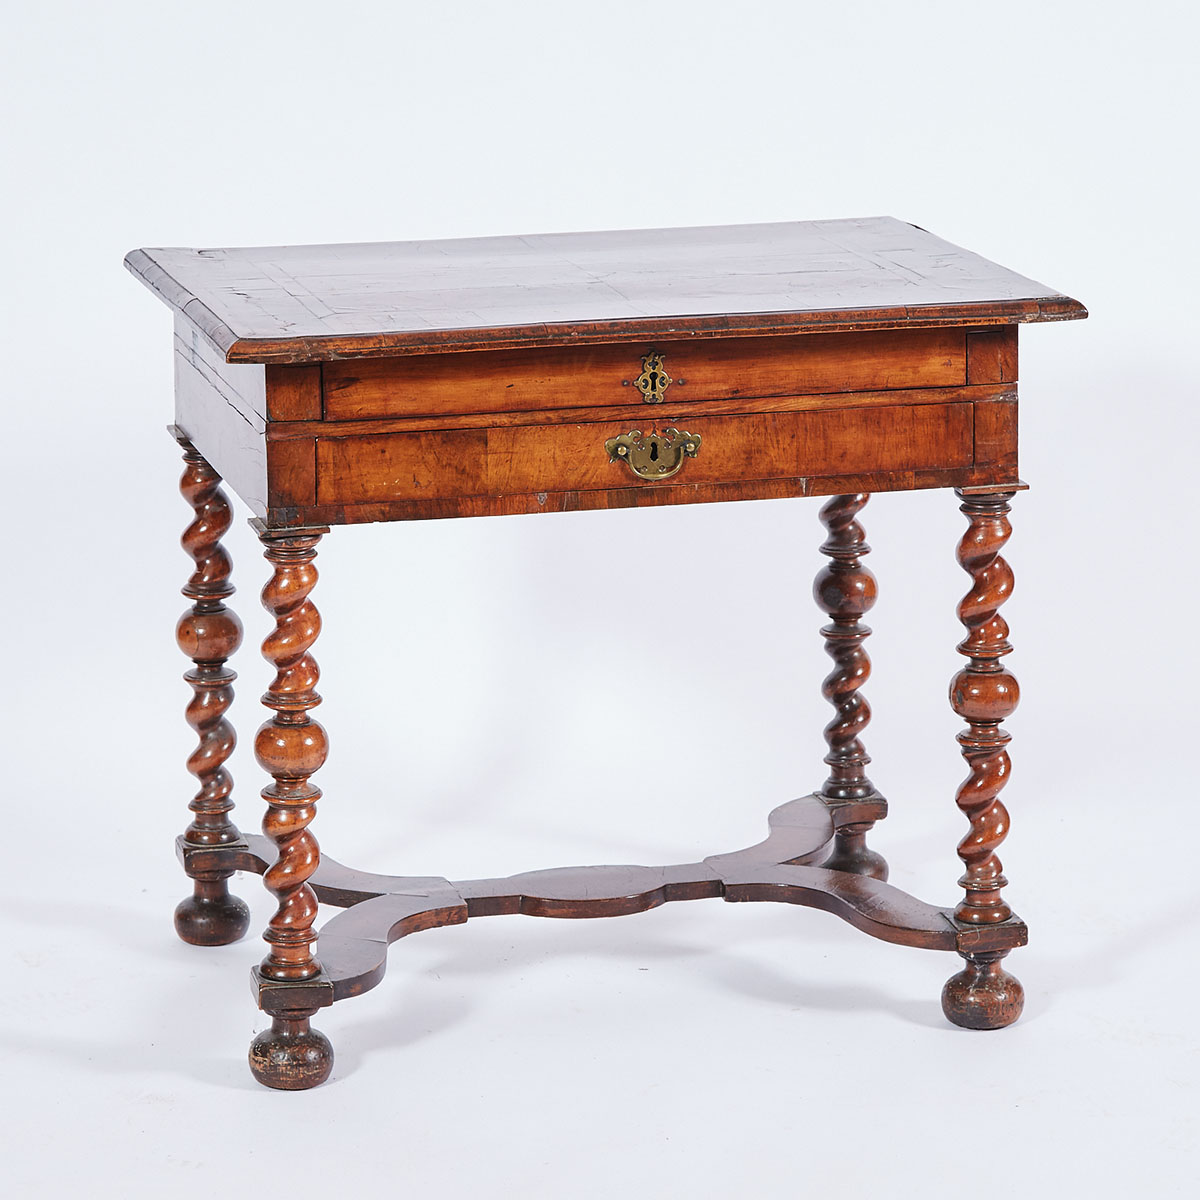 James II Figured Walnut Lift Top Writing Table, late 17th century